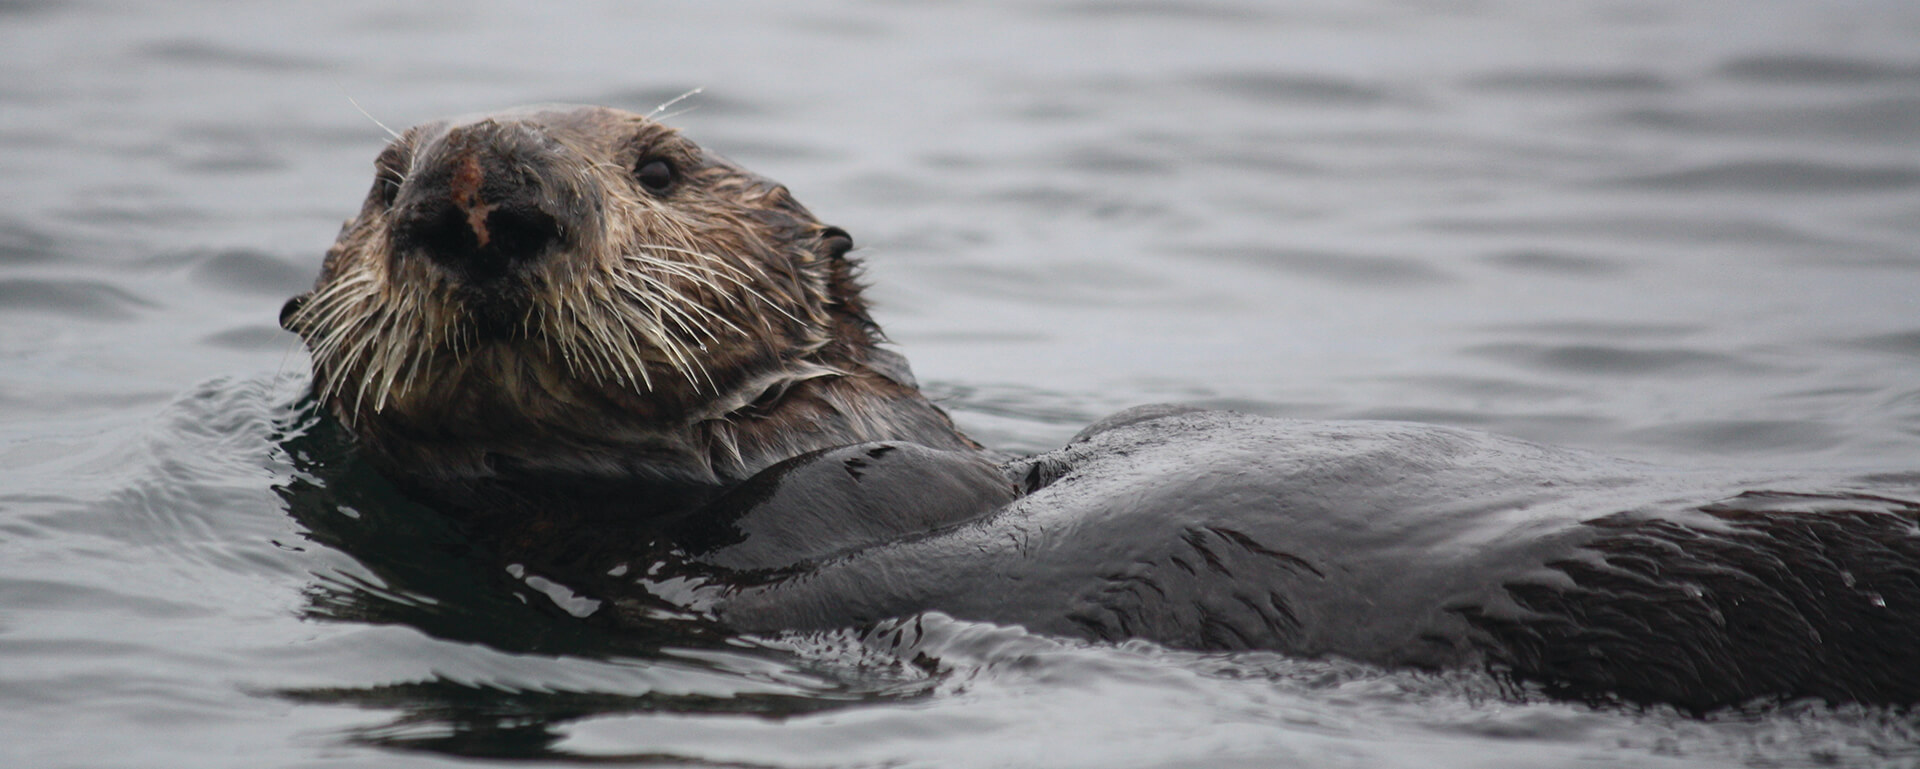 A sea otter floats on it's back